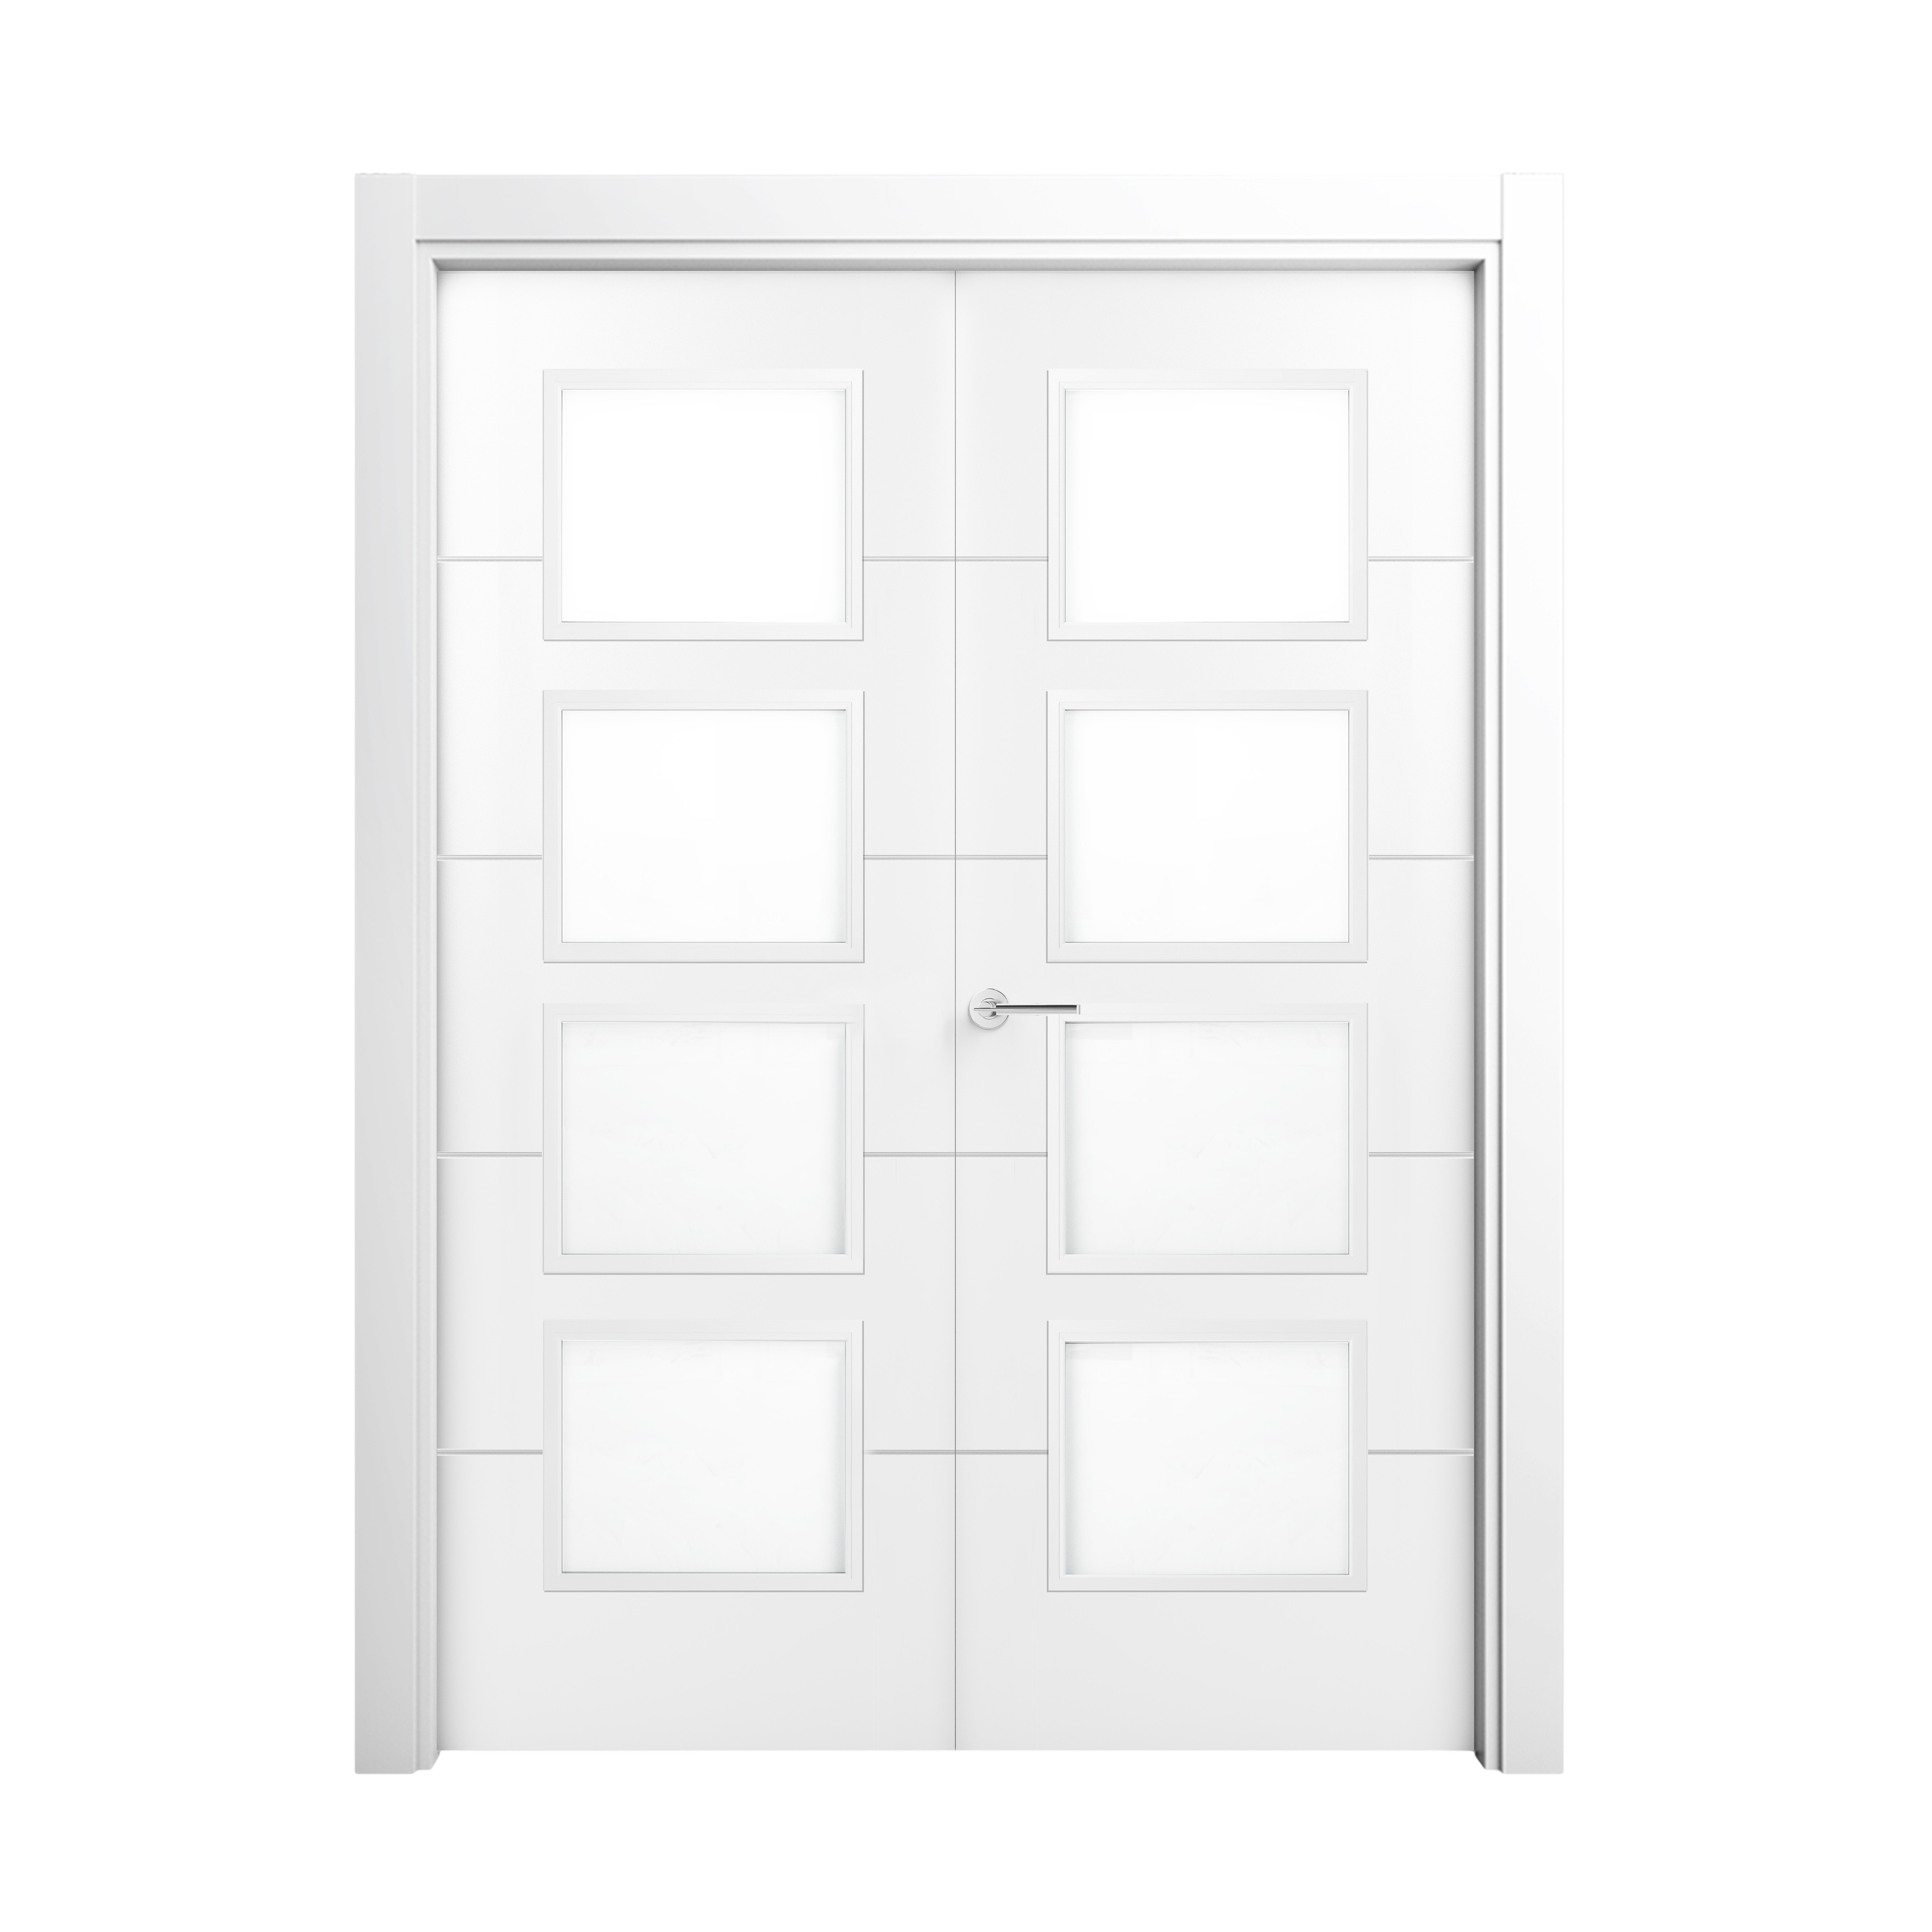 Puerta lucerna premium blanco apertura derecha con cristal 9x115cm